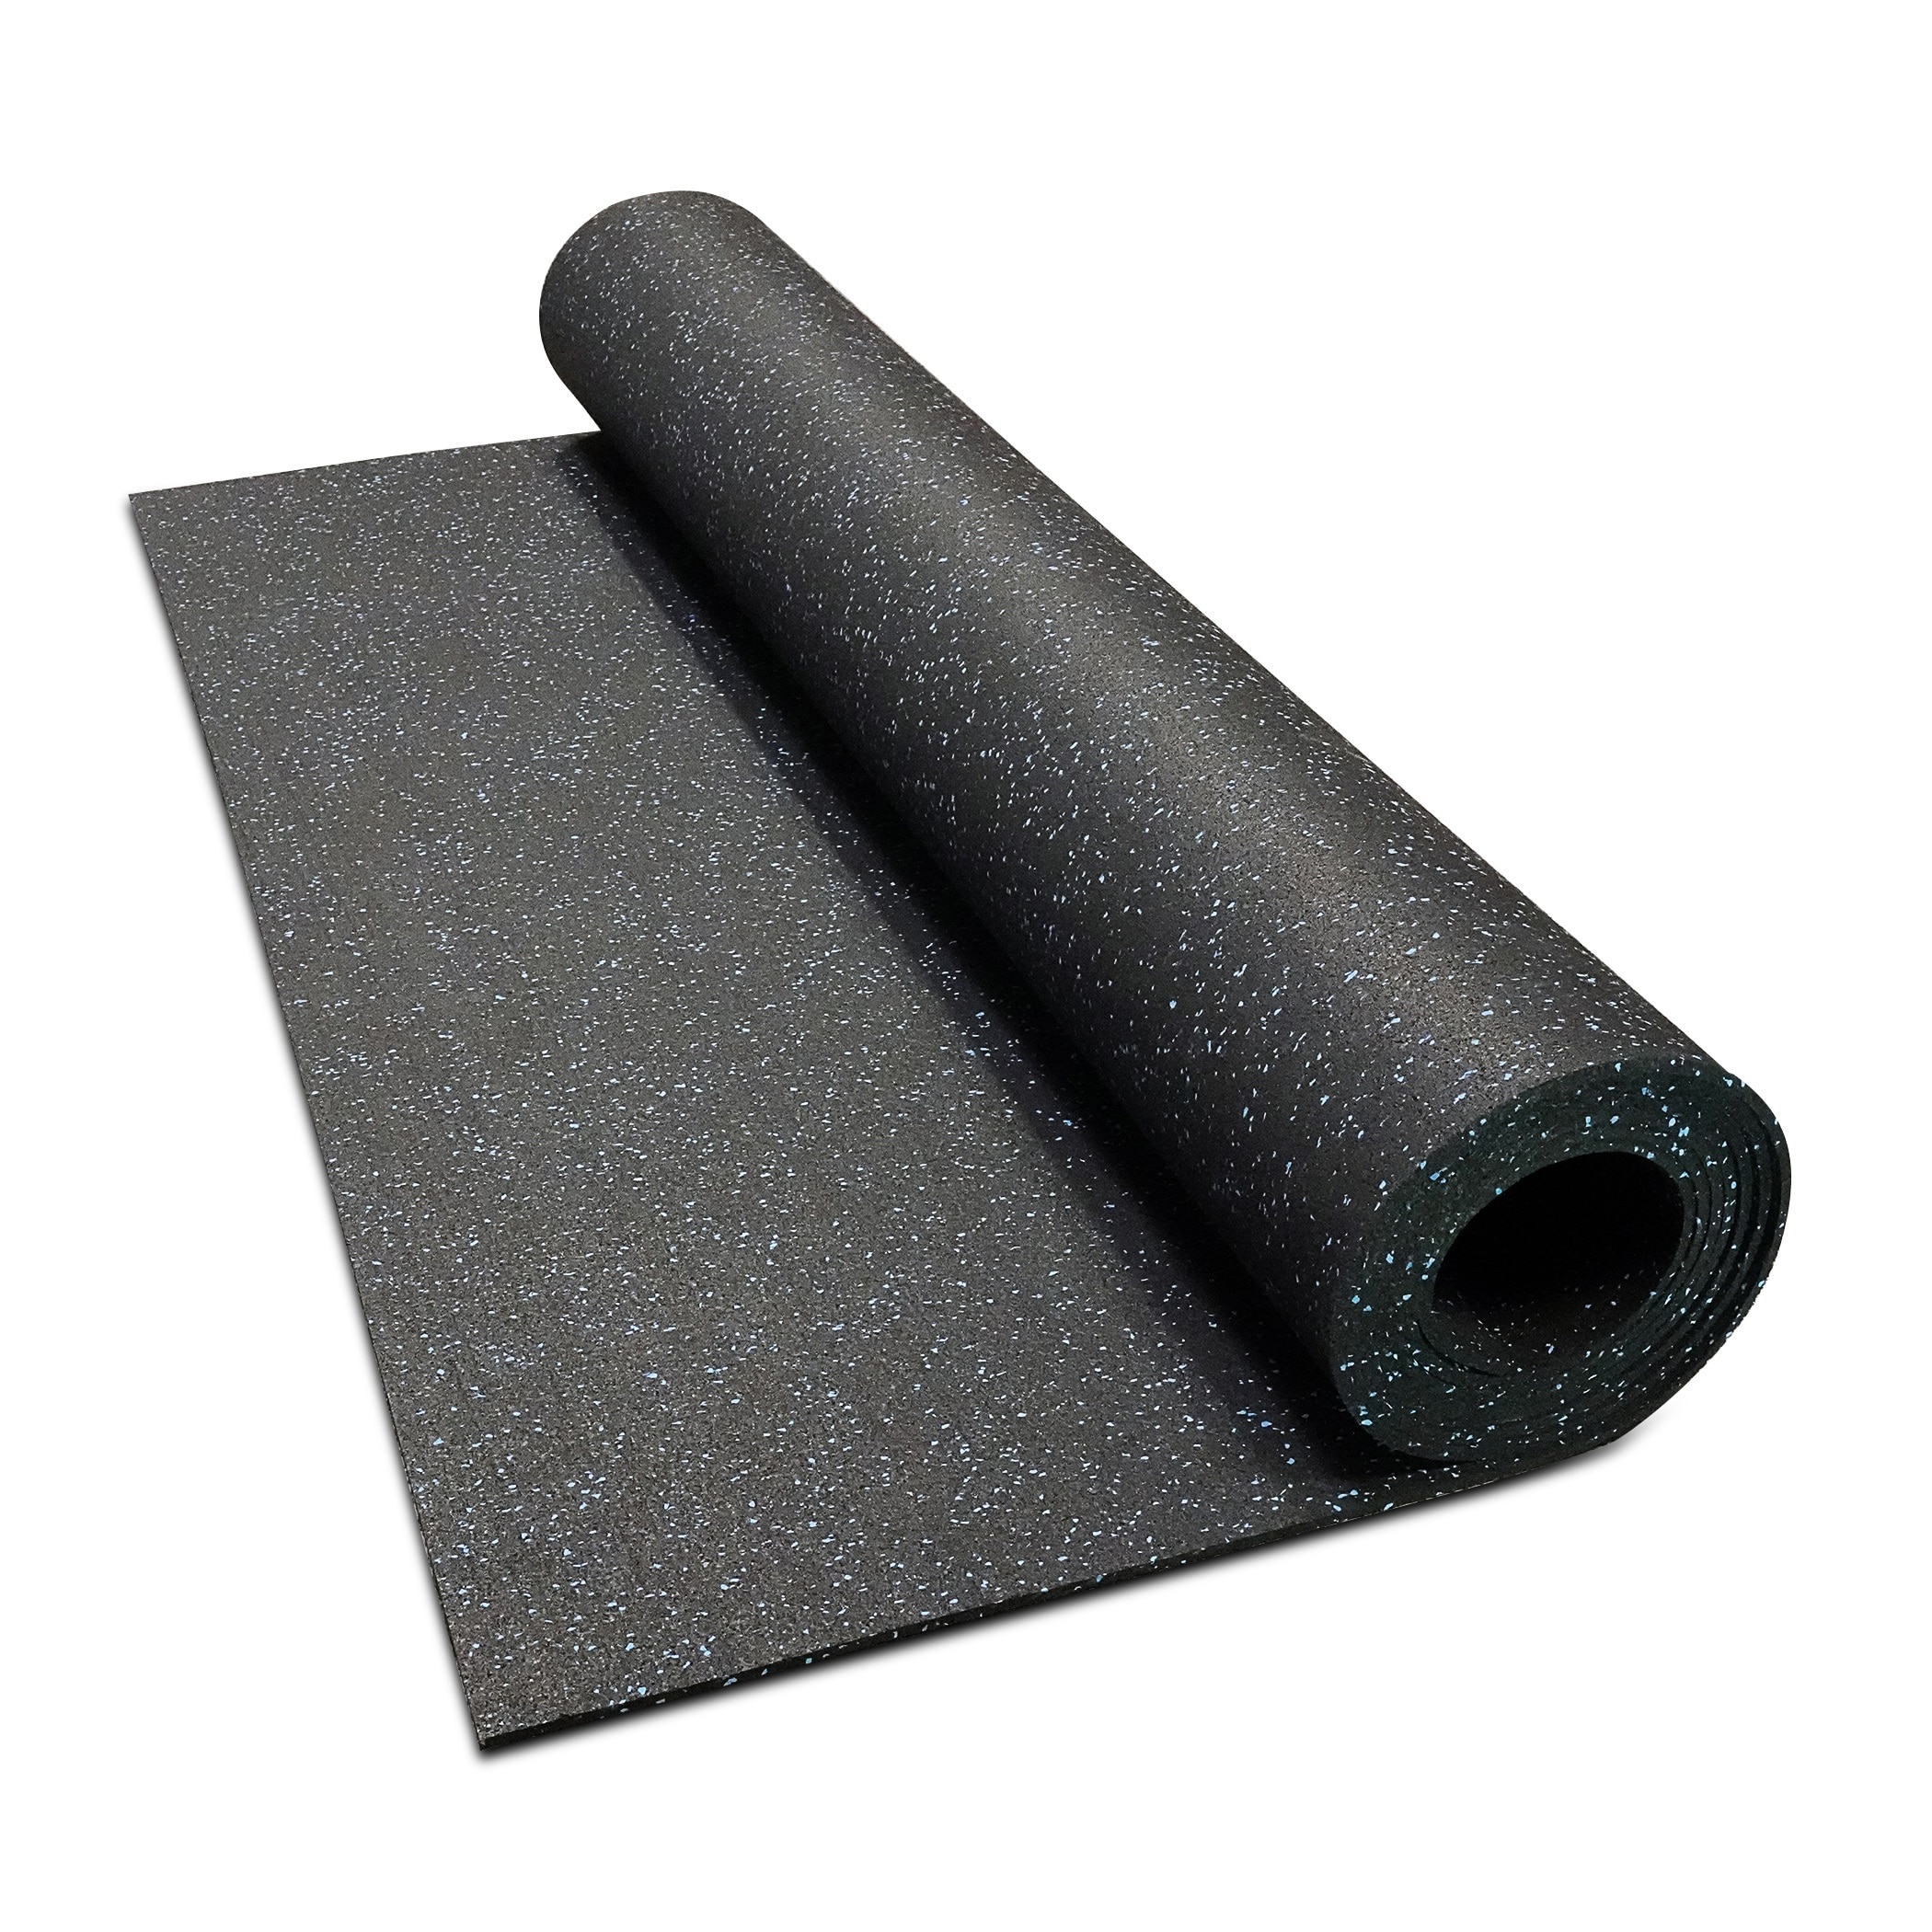 Extra Large Garage Floor Rubber Mat, Waterproof Black Diamond Plate Rubber  Flooring Roll Protector Mat for Warehouse Basement Trailer, 1/8 Thick, 2ft